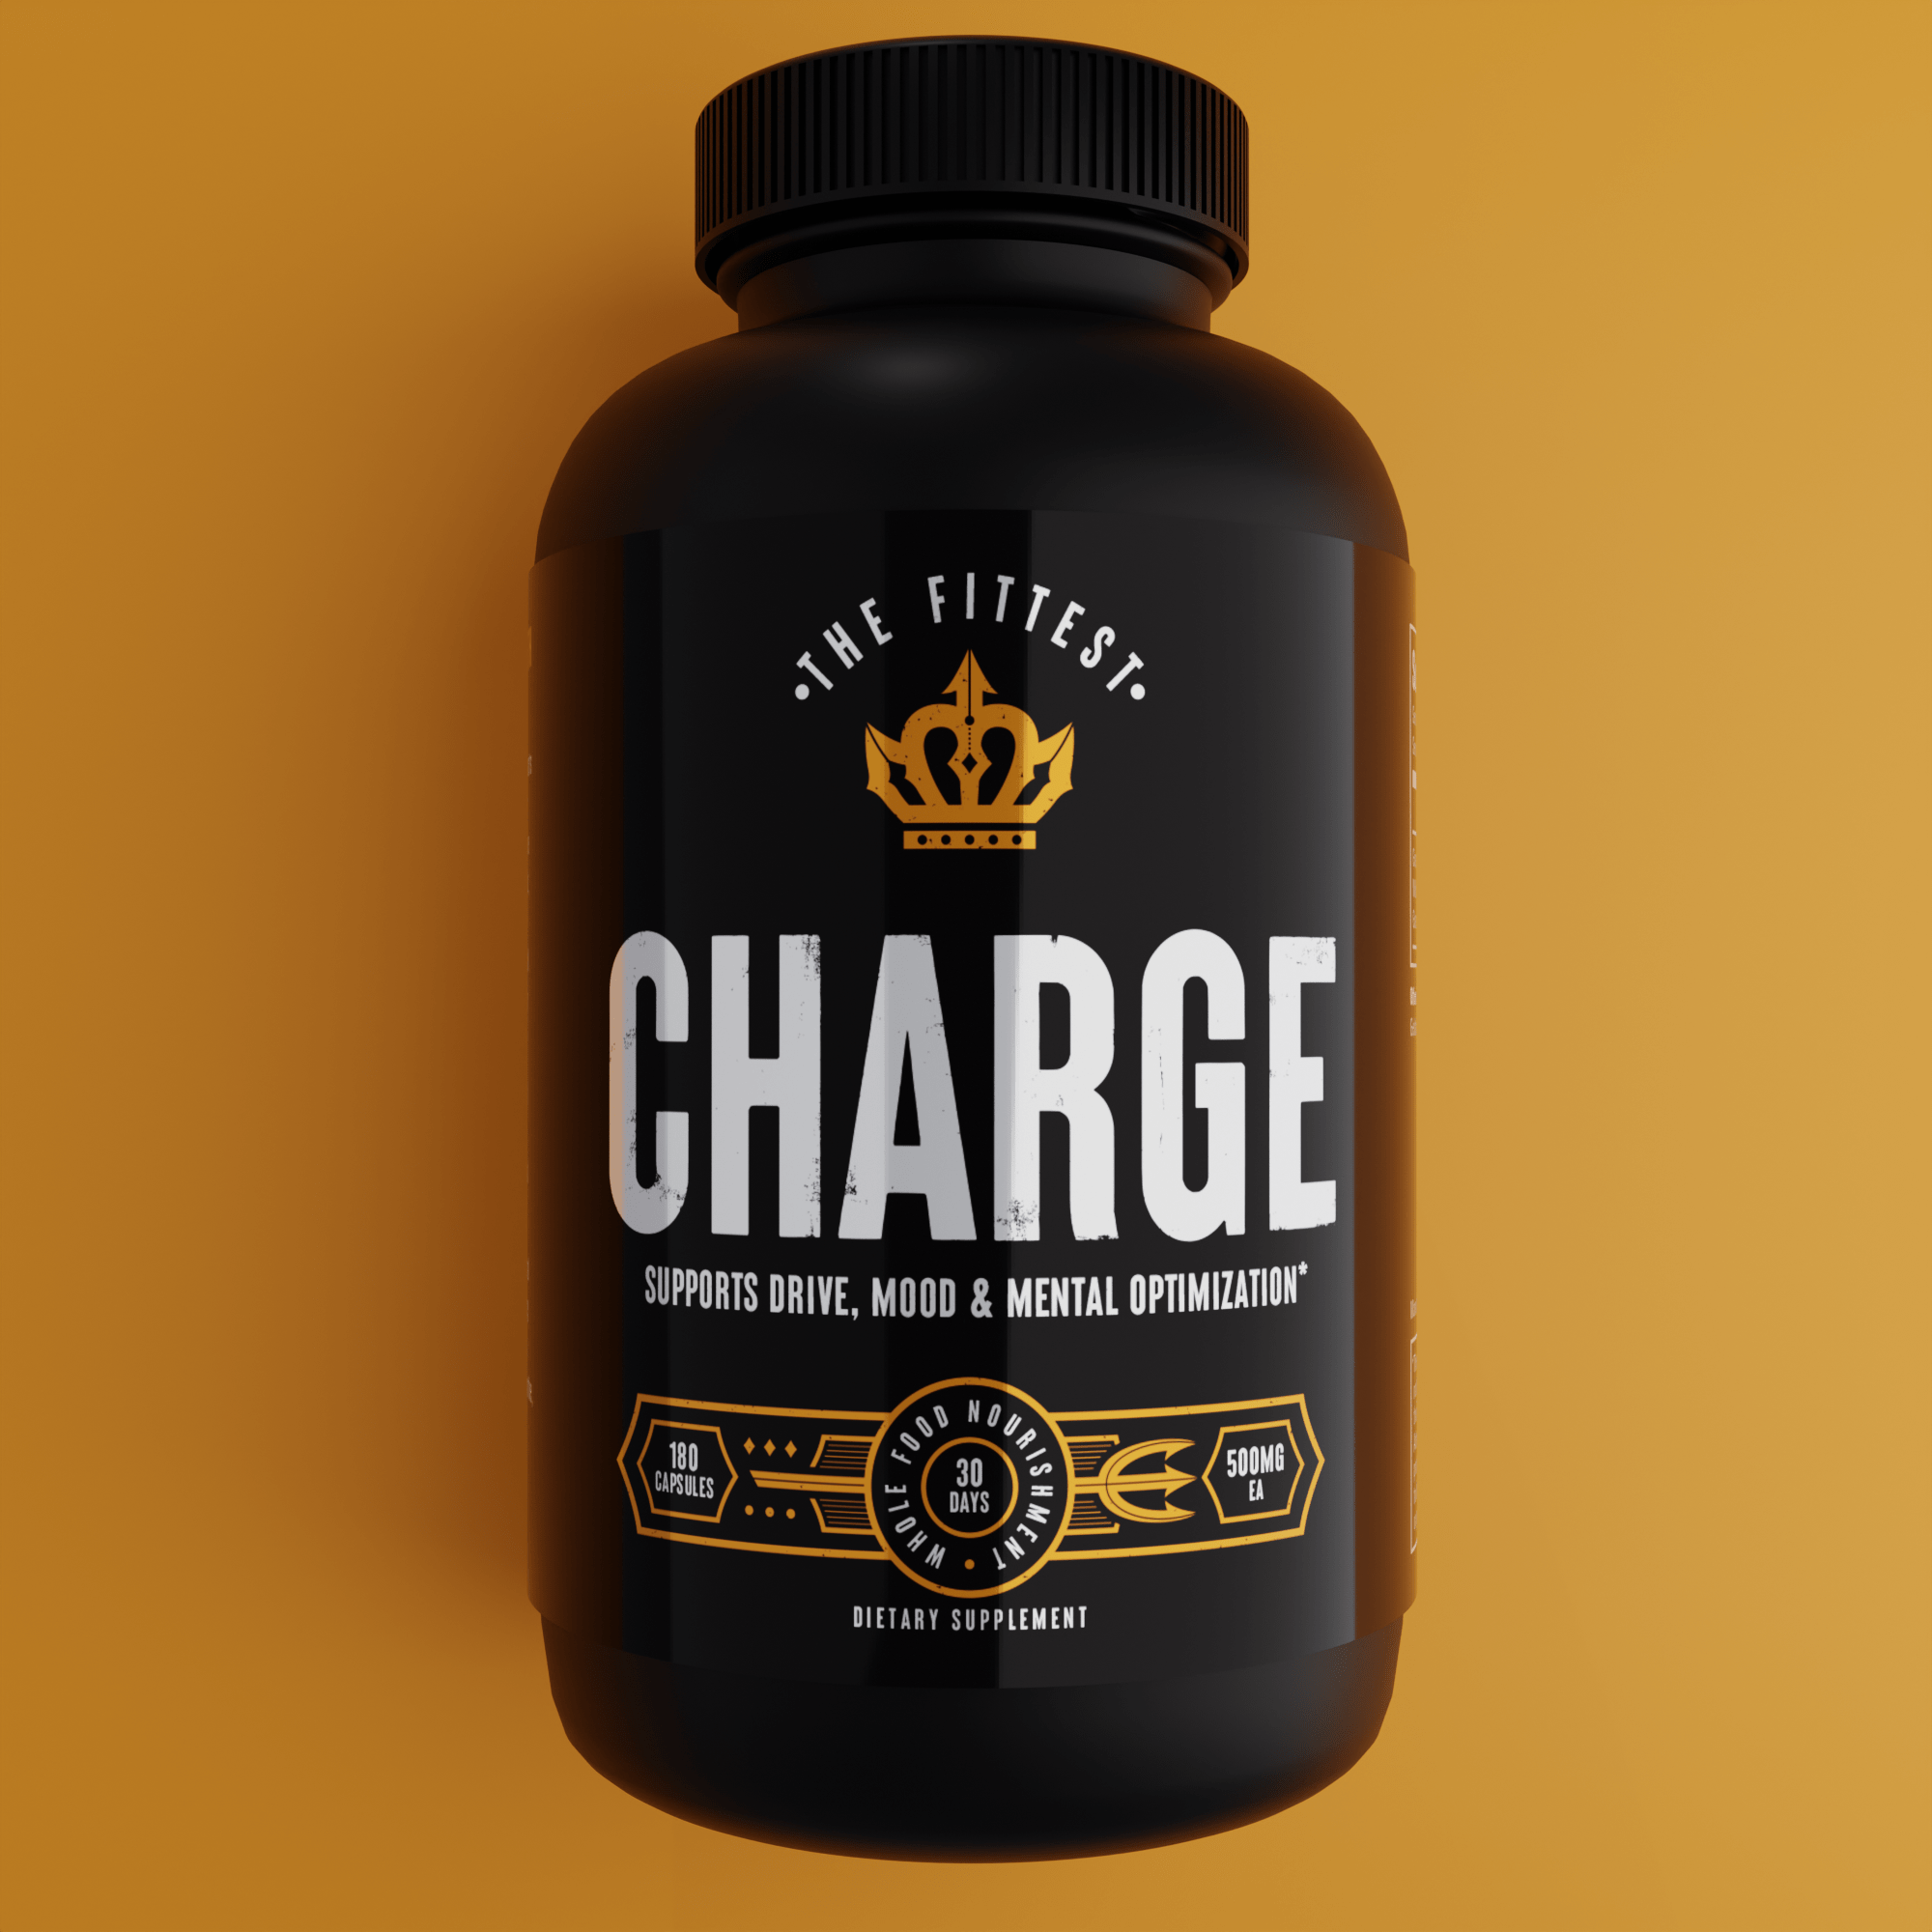 Charge bottle over orange background